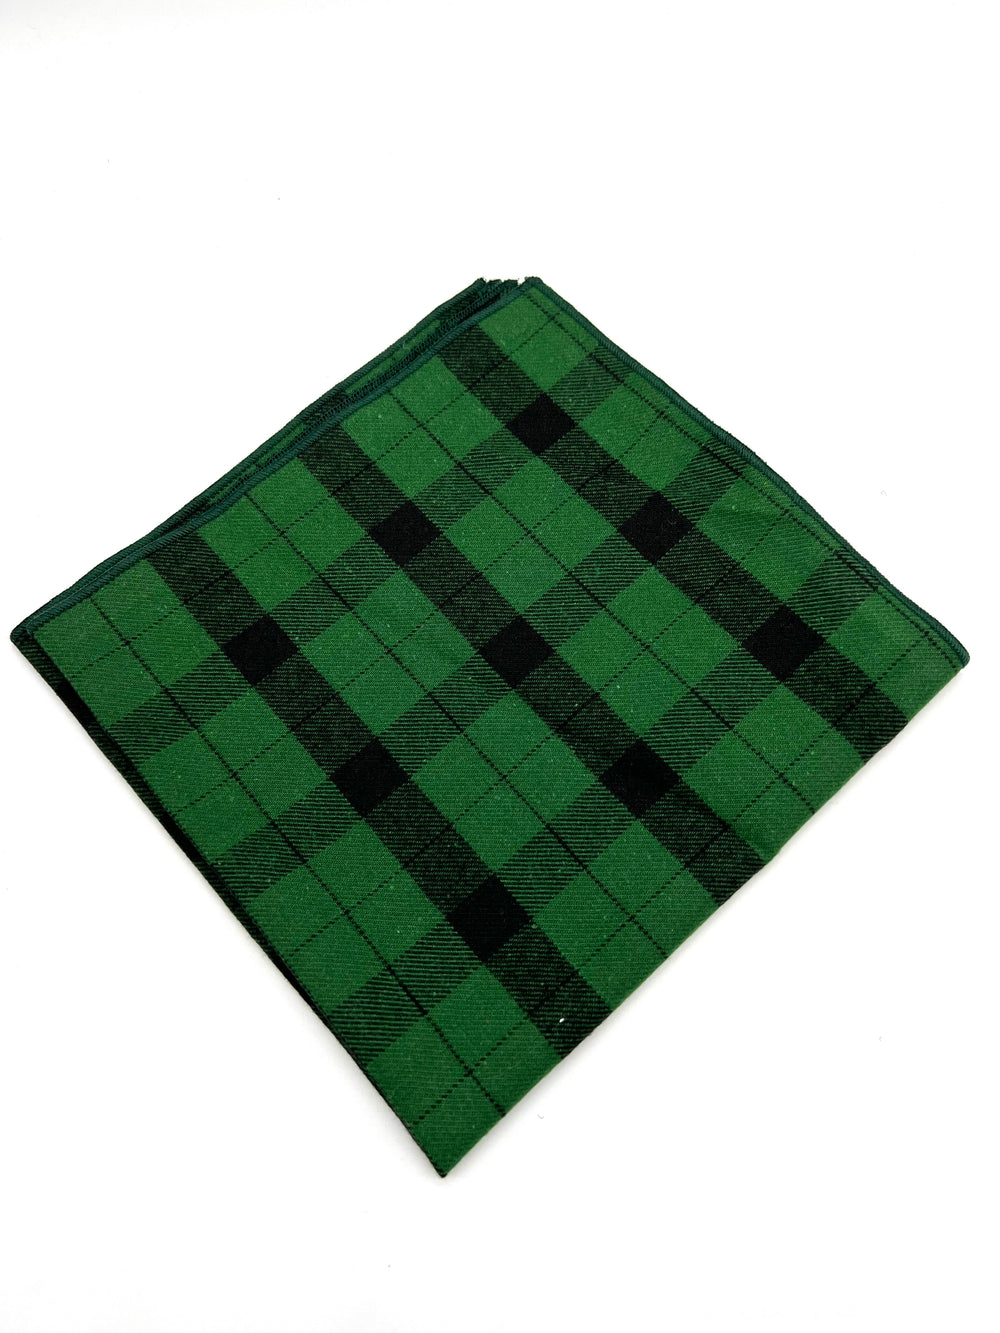 The Black & Green Handkerchief